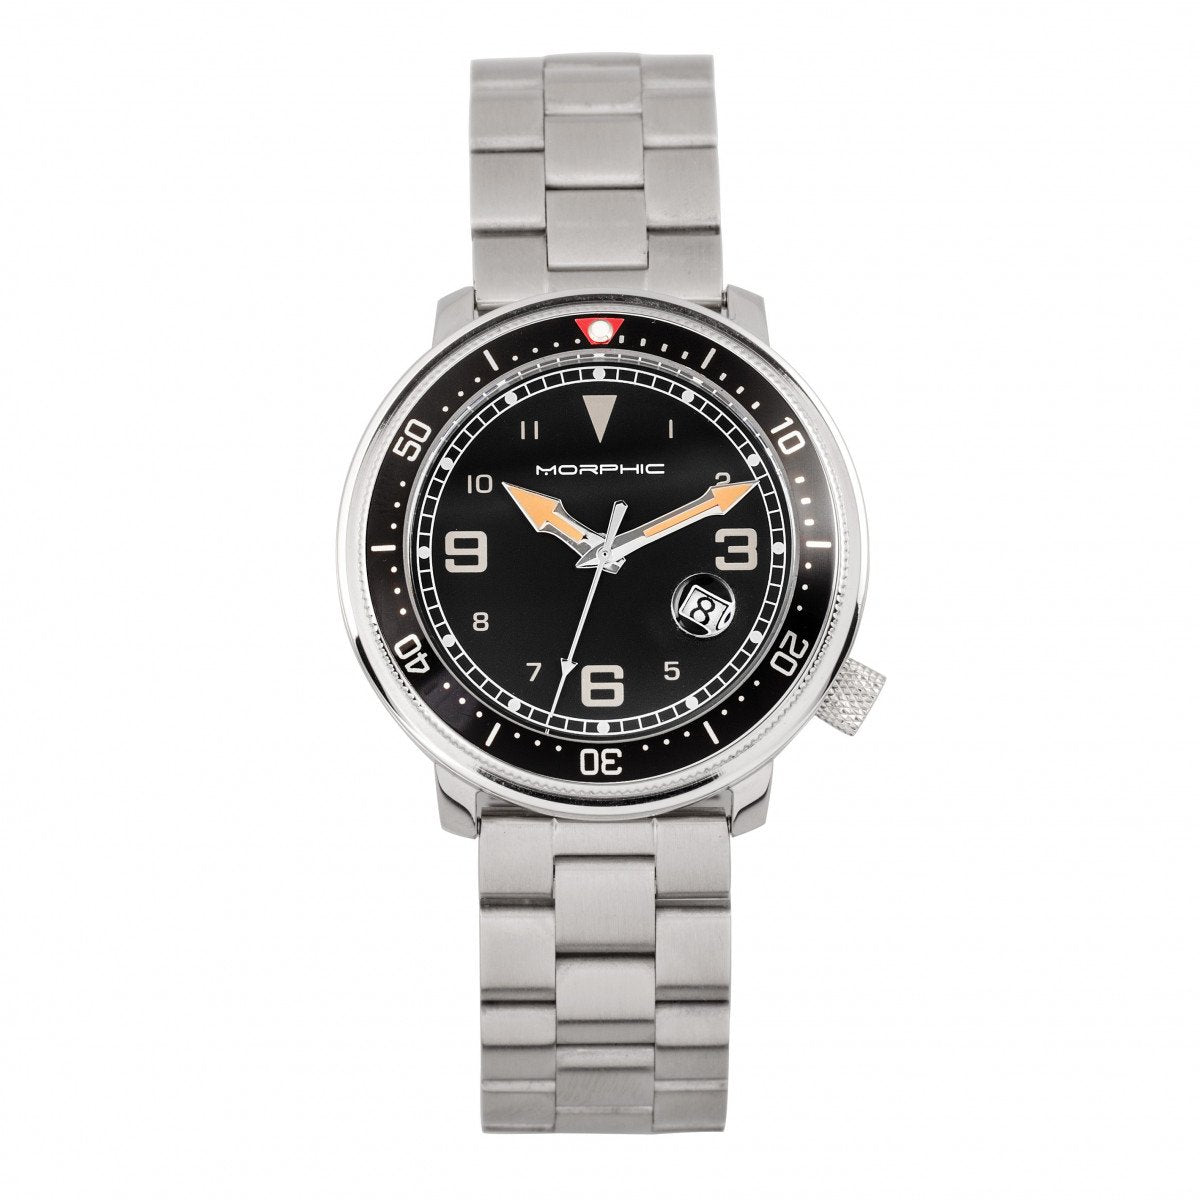 Morphic M74 Series Bracelet Watch w/Magnified Date Display - Gunmetal/Black & Silver/Black - MPH7405